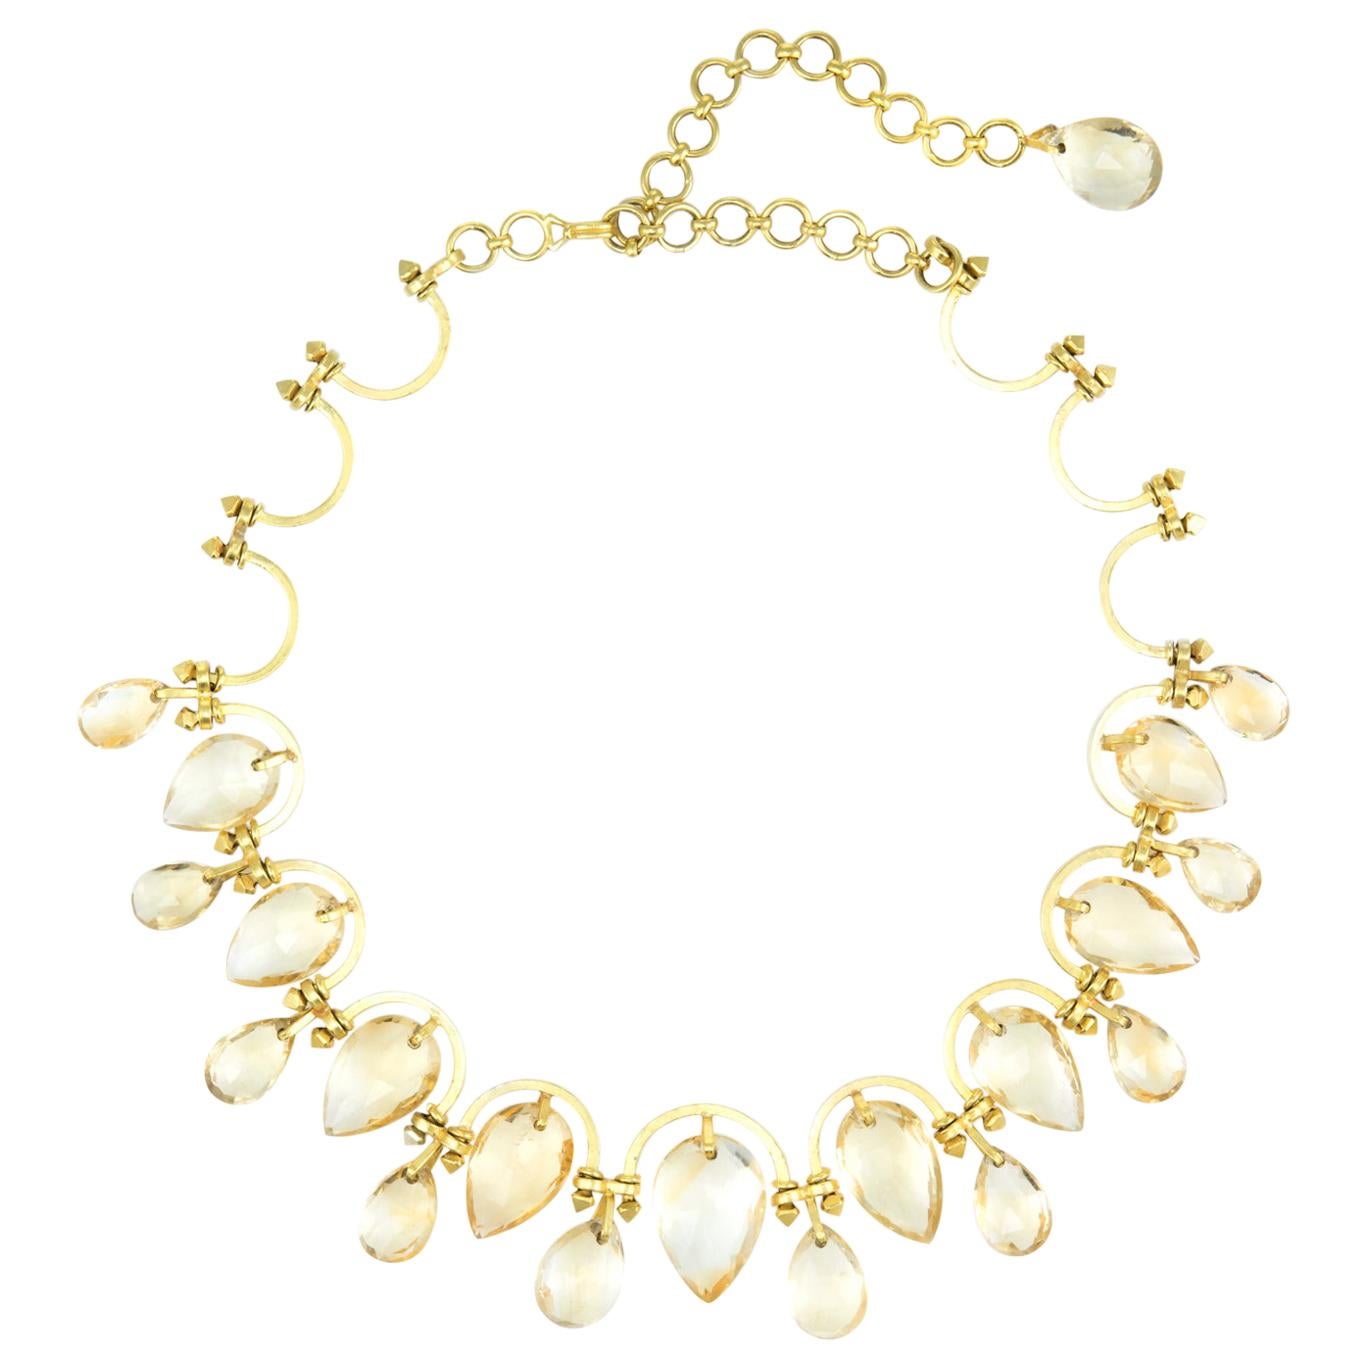 Golden Yellow Topaz Necklace Vintage Statement Choker 18k Gold Estate Jewelry